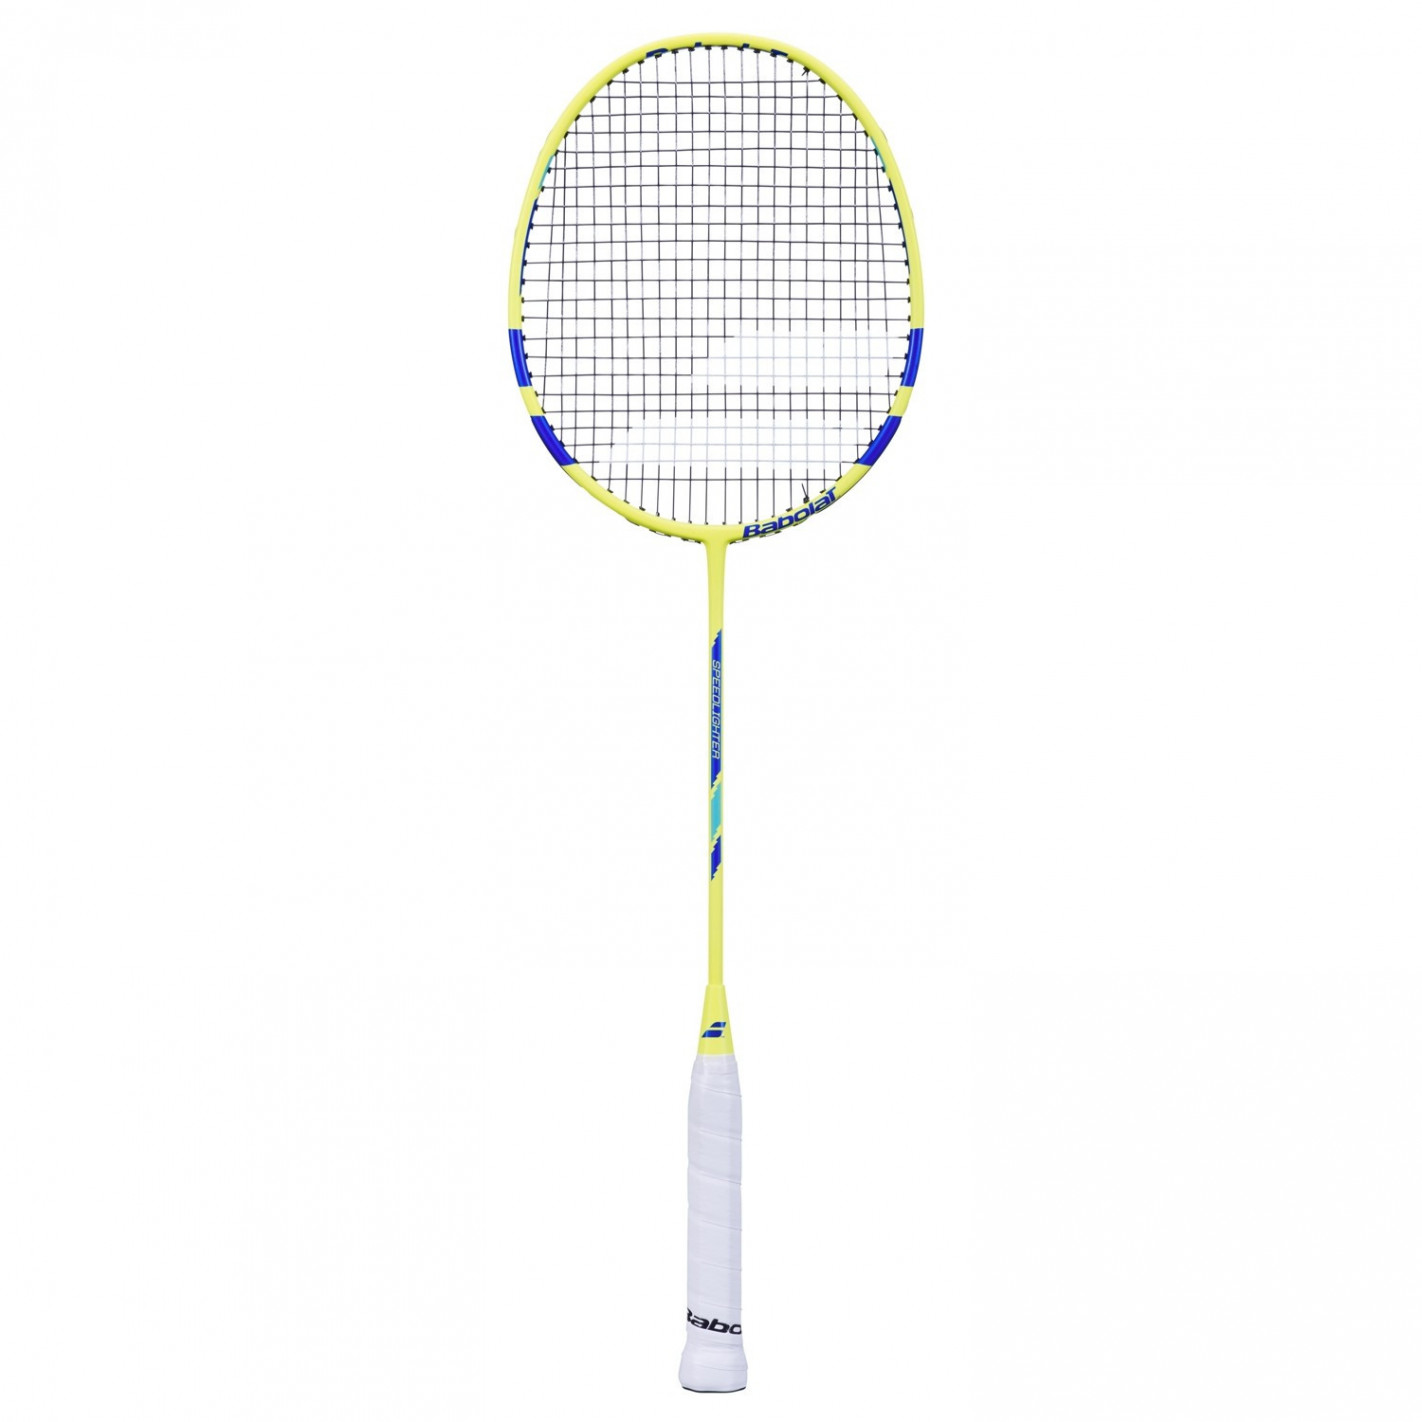 Raquette Badminton BABOLAT SPEEDLIGHTER Jaune / Bleu (85 g) 2019